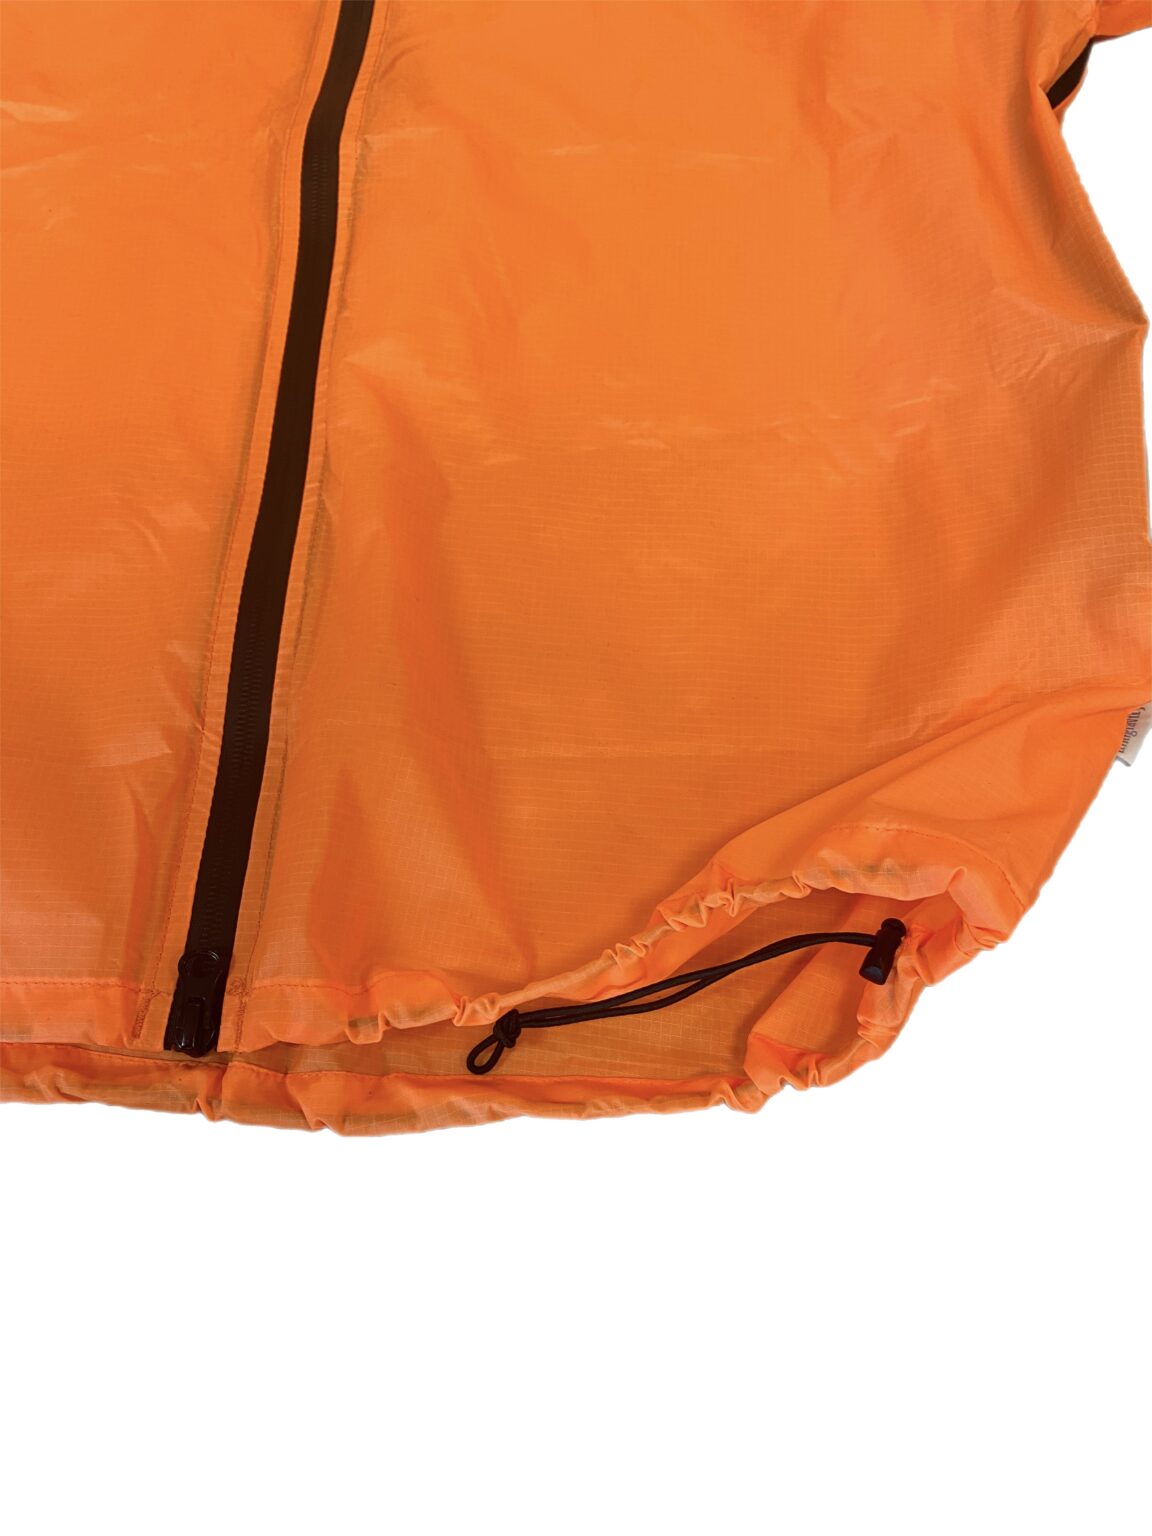 2.0 AntiGravityGear Ultralight Rain Jacket w/ Pit Zips – AntiGravityGear